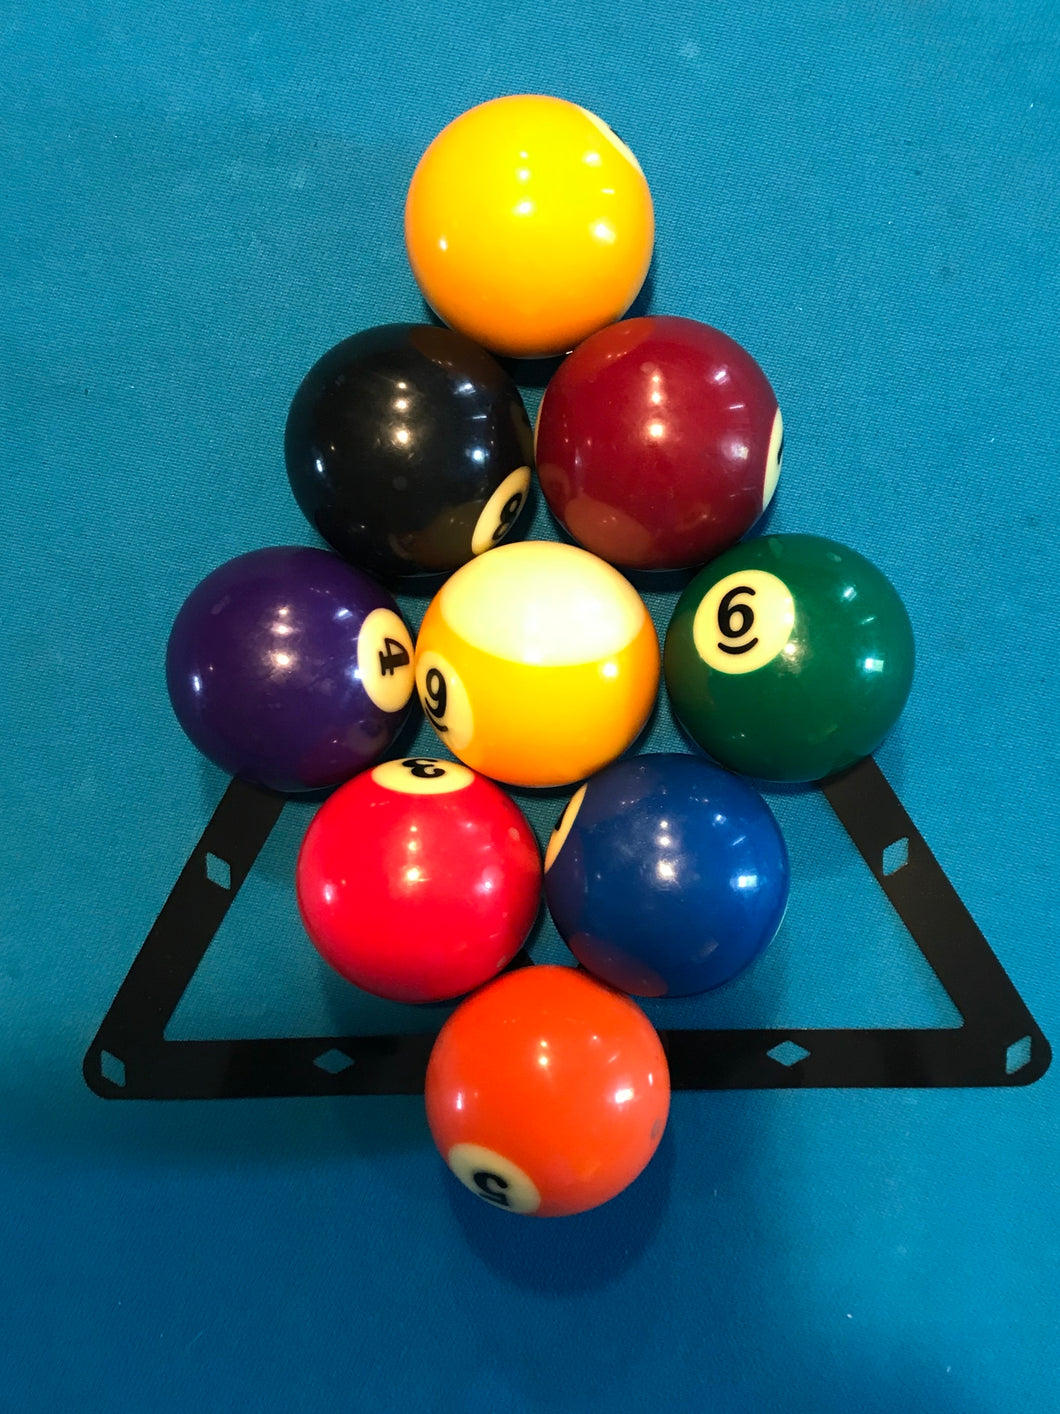 Pool Table Ball Racks - Magic Ball Rack Pro All in One 8-9-10